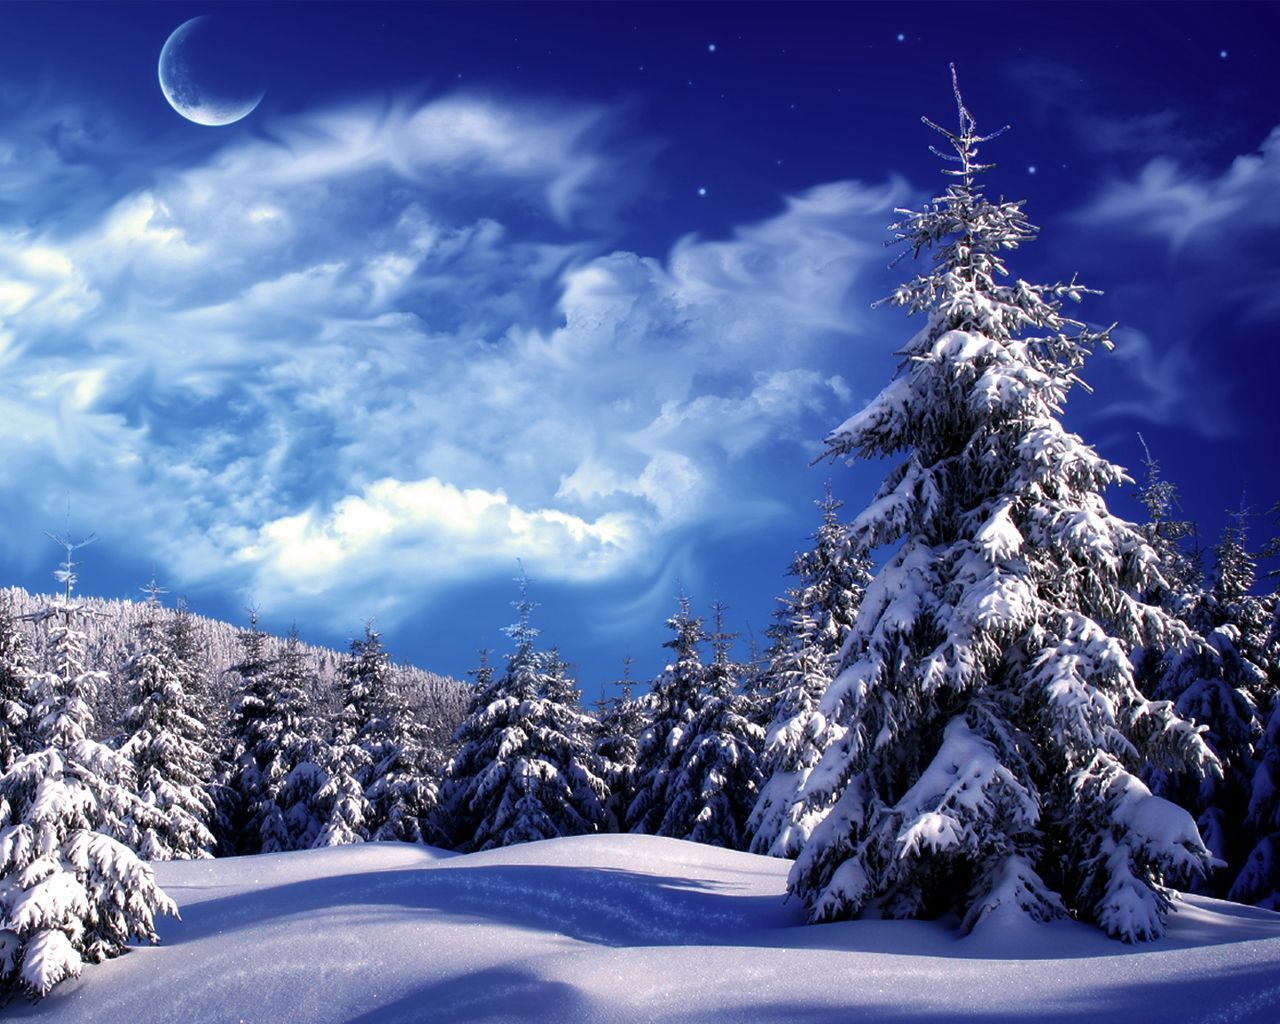 Tron Free Wallpaper: Free Online Wallpaper. Winter scenery, Winter picture, Winter snow wallpaper